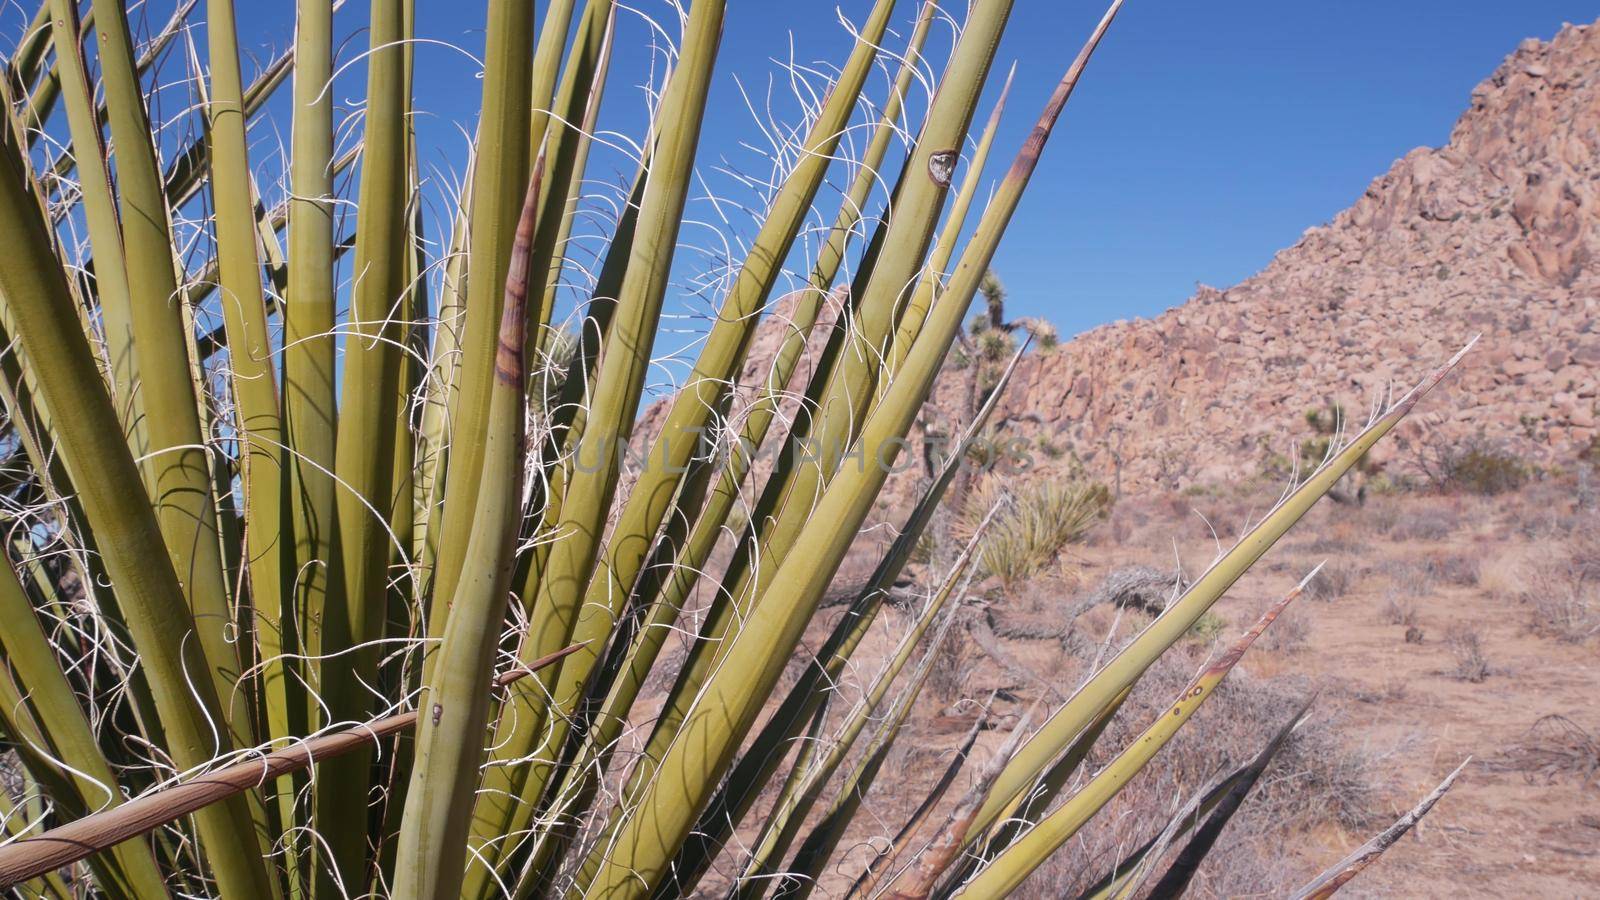 Desert plants, cactus in Joshua tree national park, California valley wilderness by DogoraSun